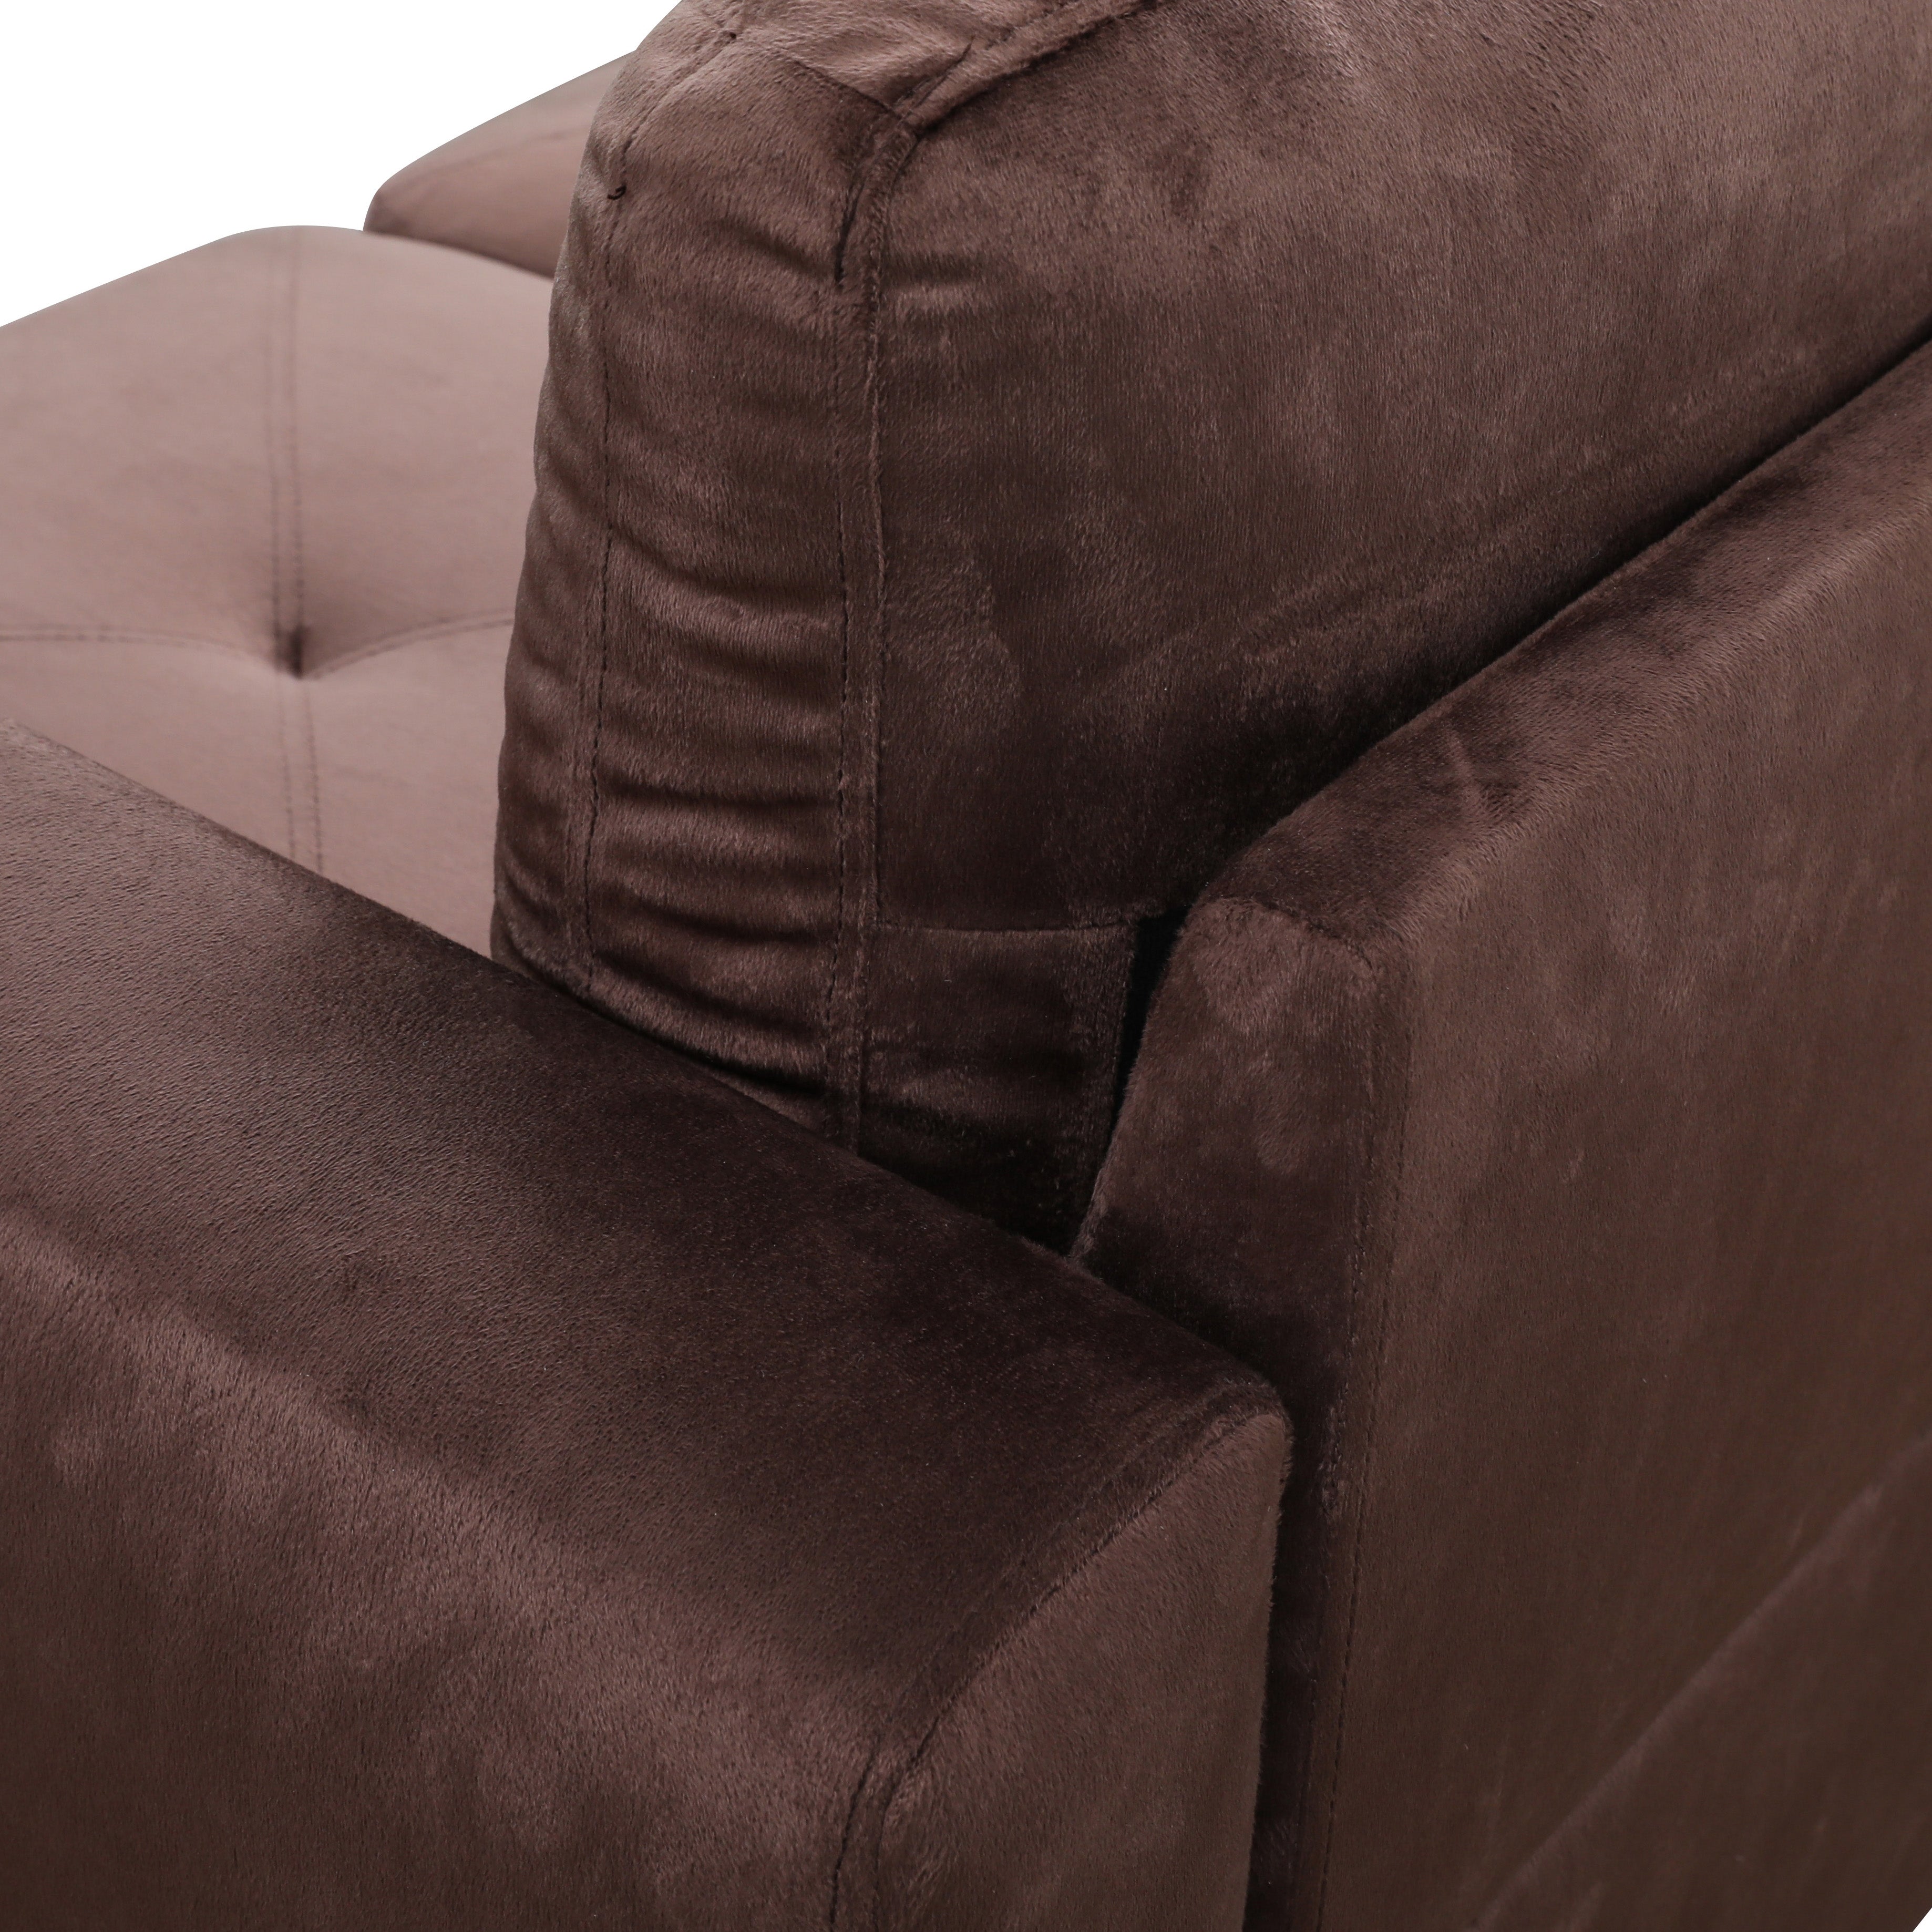 Ainehome Brown L-Shaped Microfiber Sofa Set